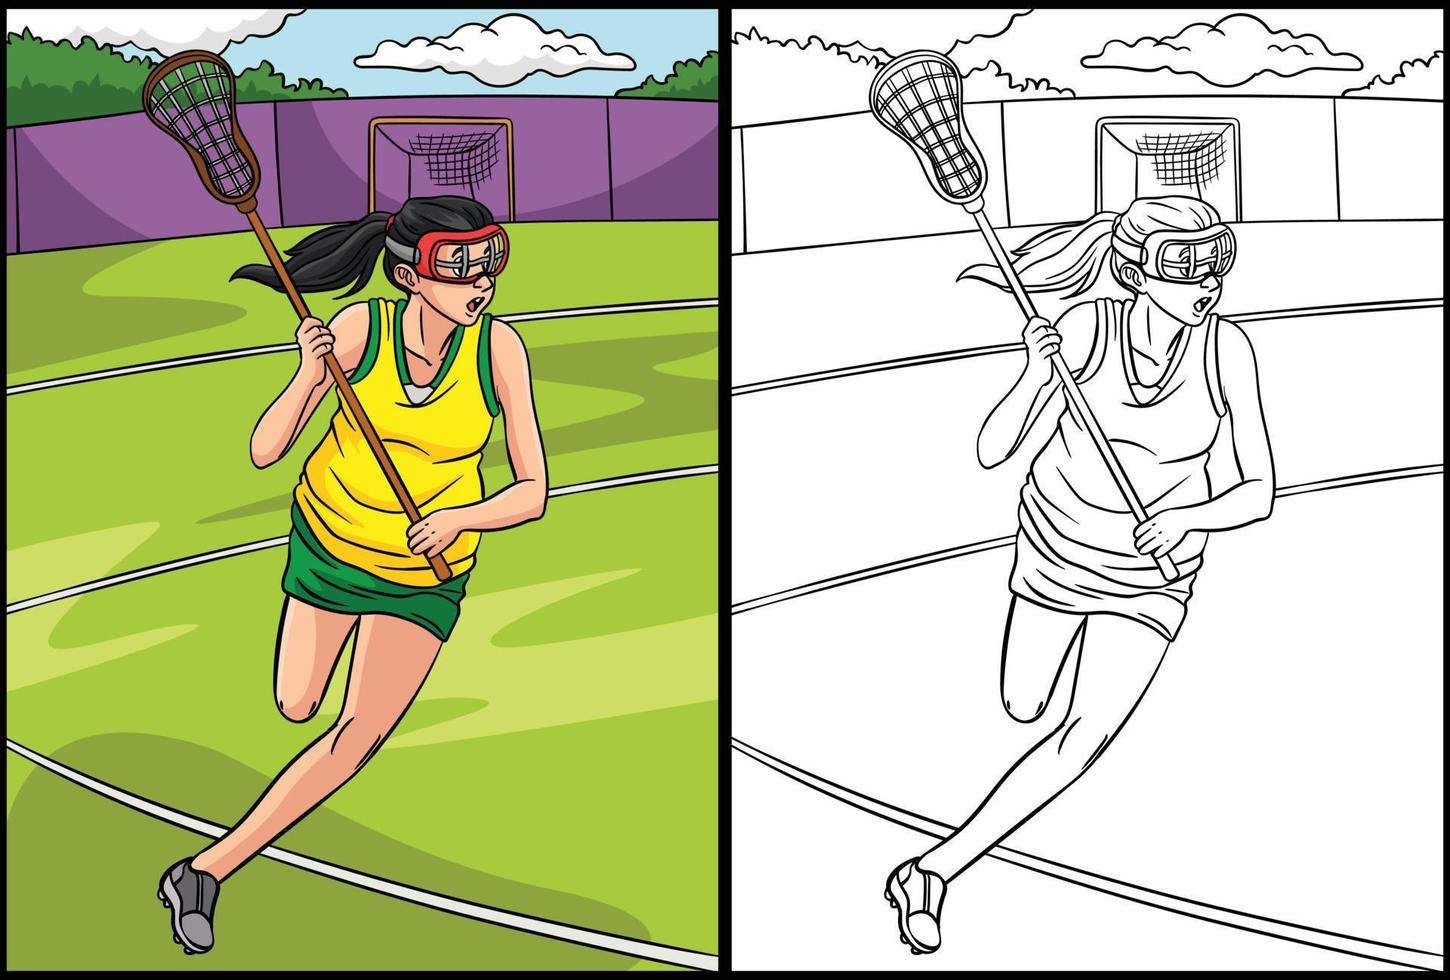 lacrosse malseite farbige illustration vektor